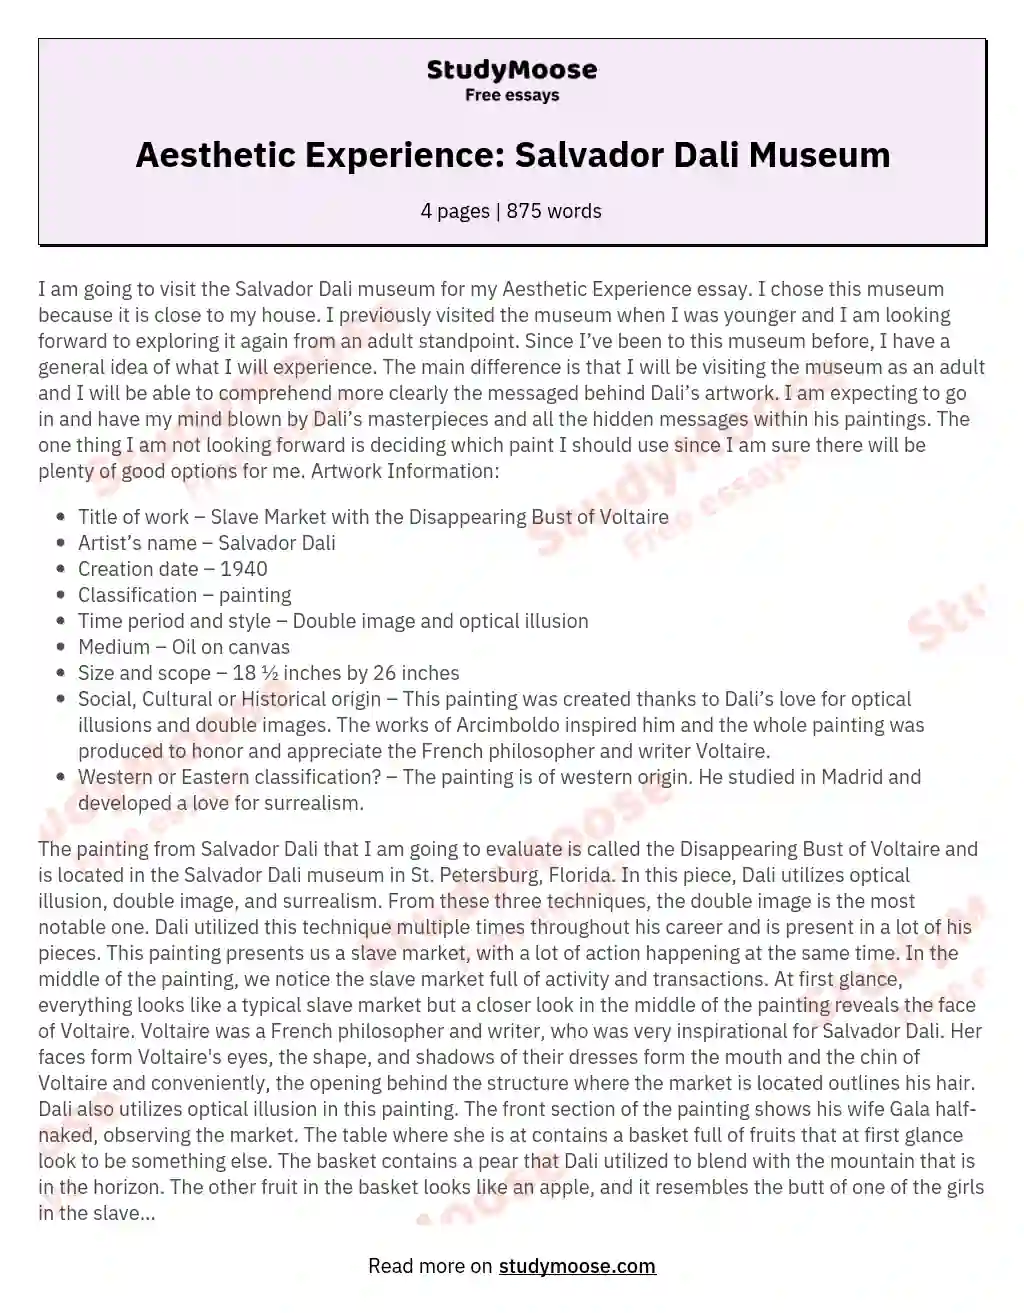 Aesthetic Experience: Salvador Dali Museum